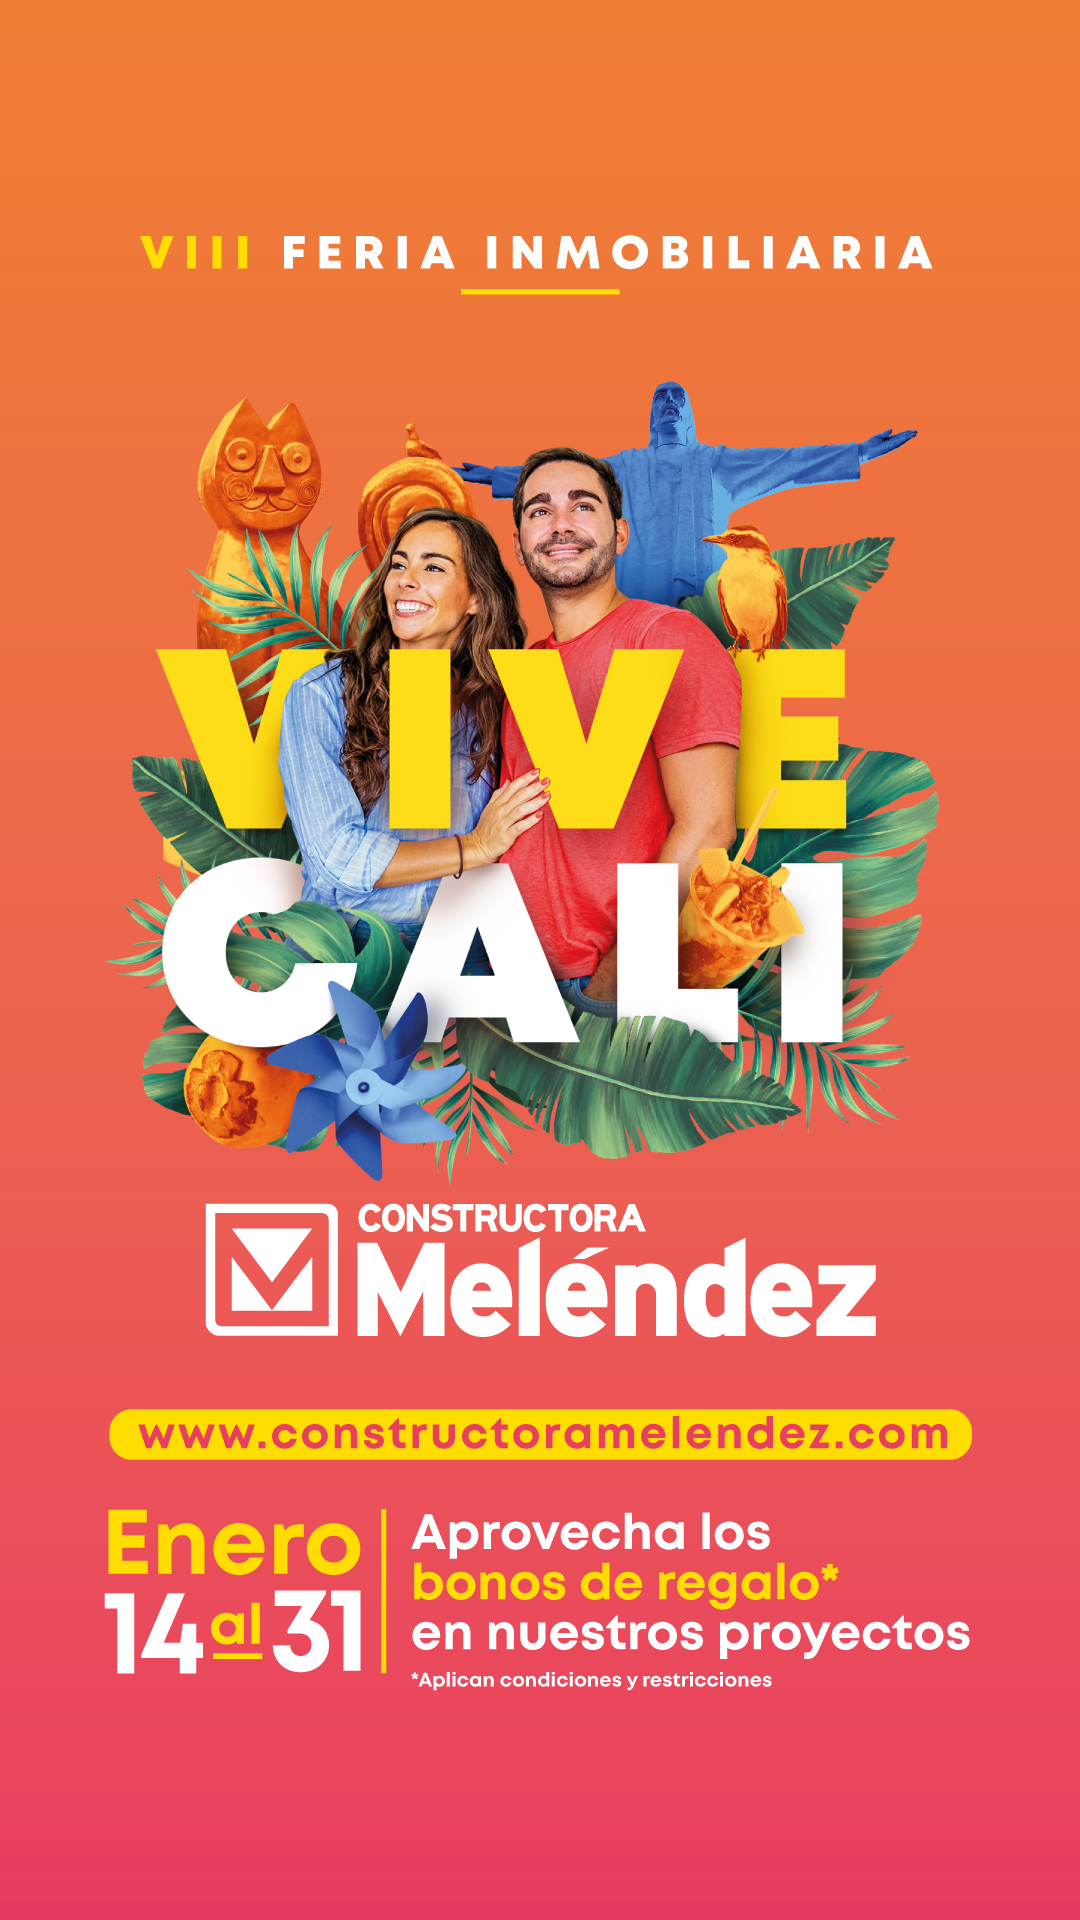 ¡Feria Inmobiliaria Vive Cali 2022! Constructora Meléndez